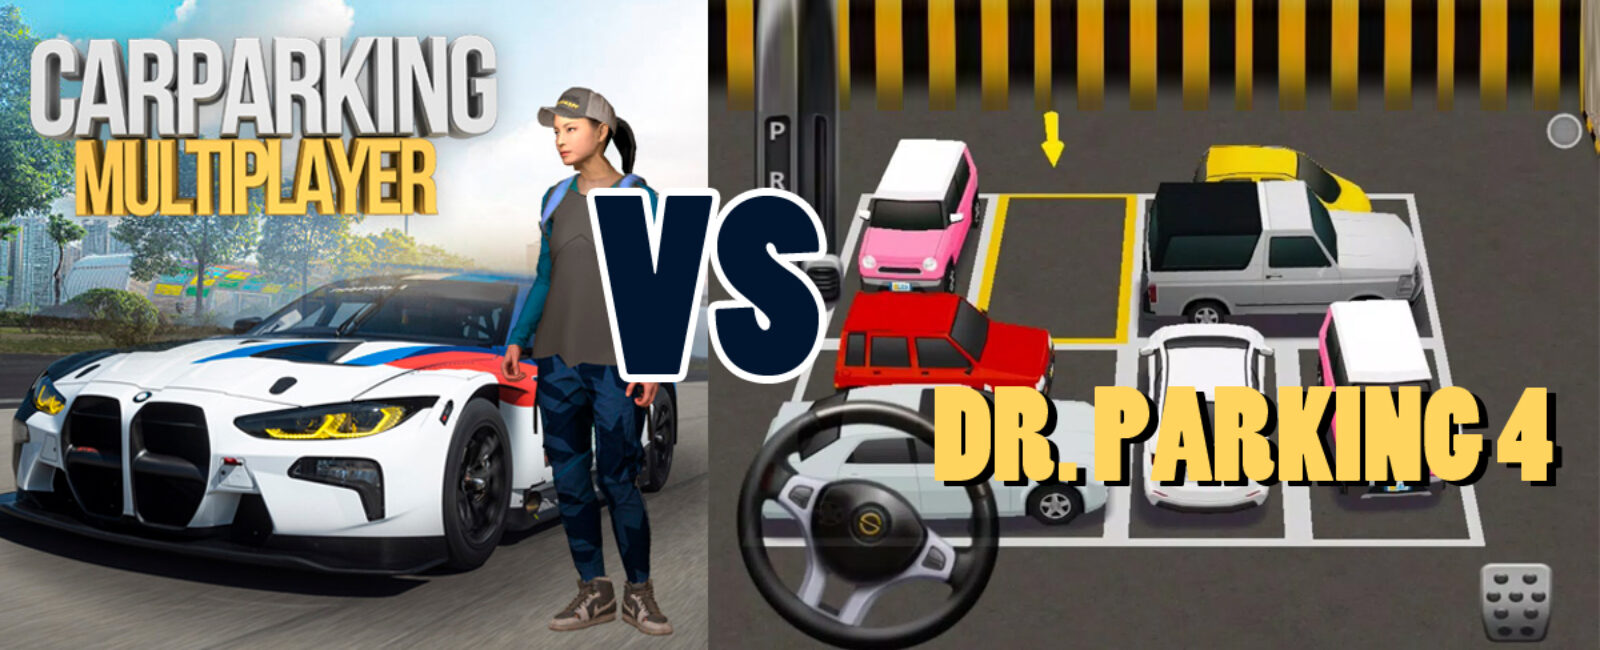 Car Parking Multiplayer Mod APK VS. Dr. Parking 4 APK